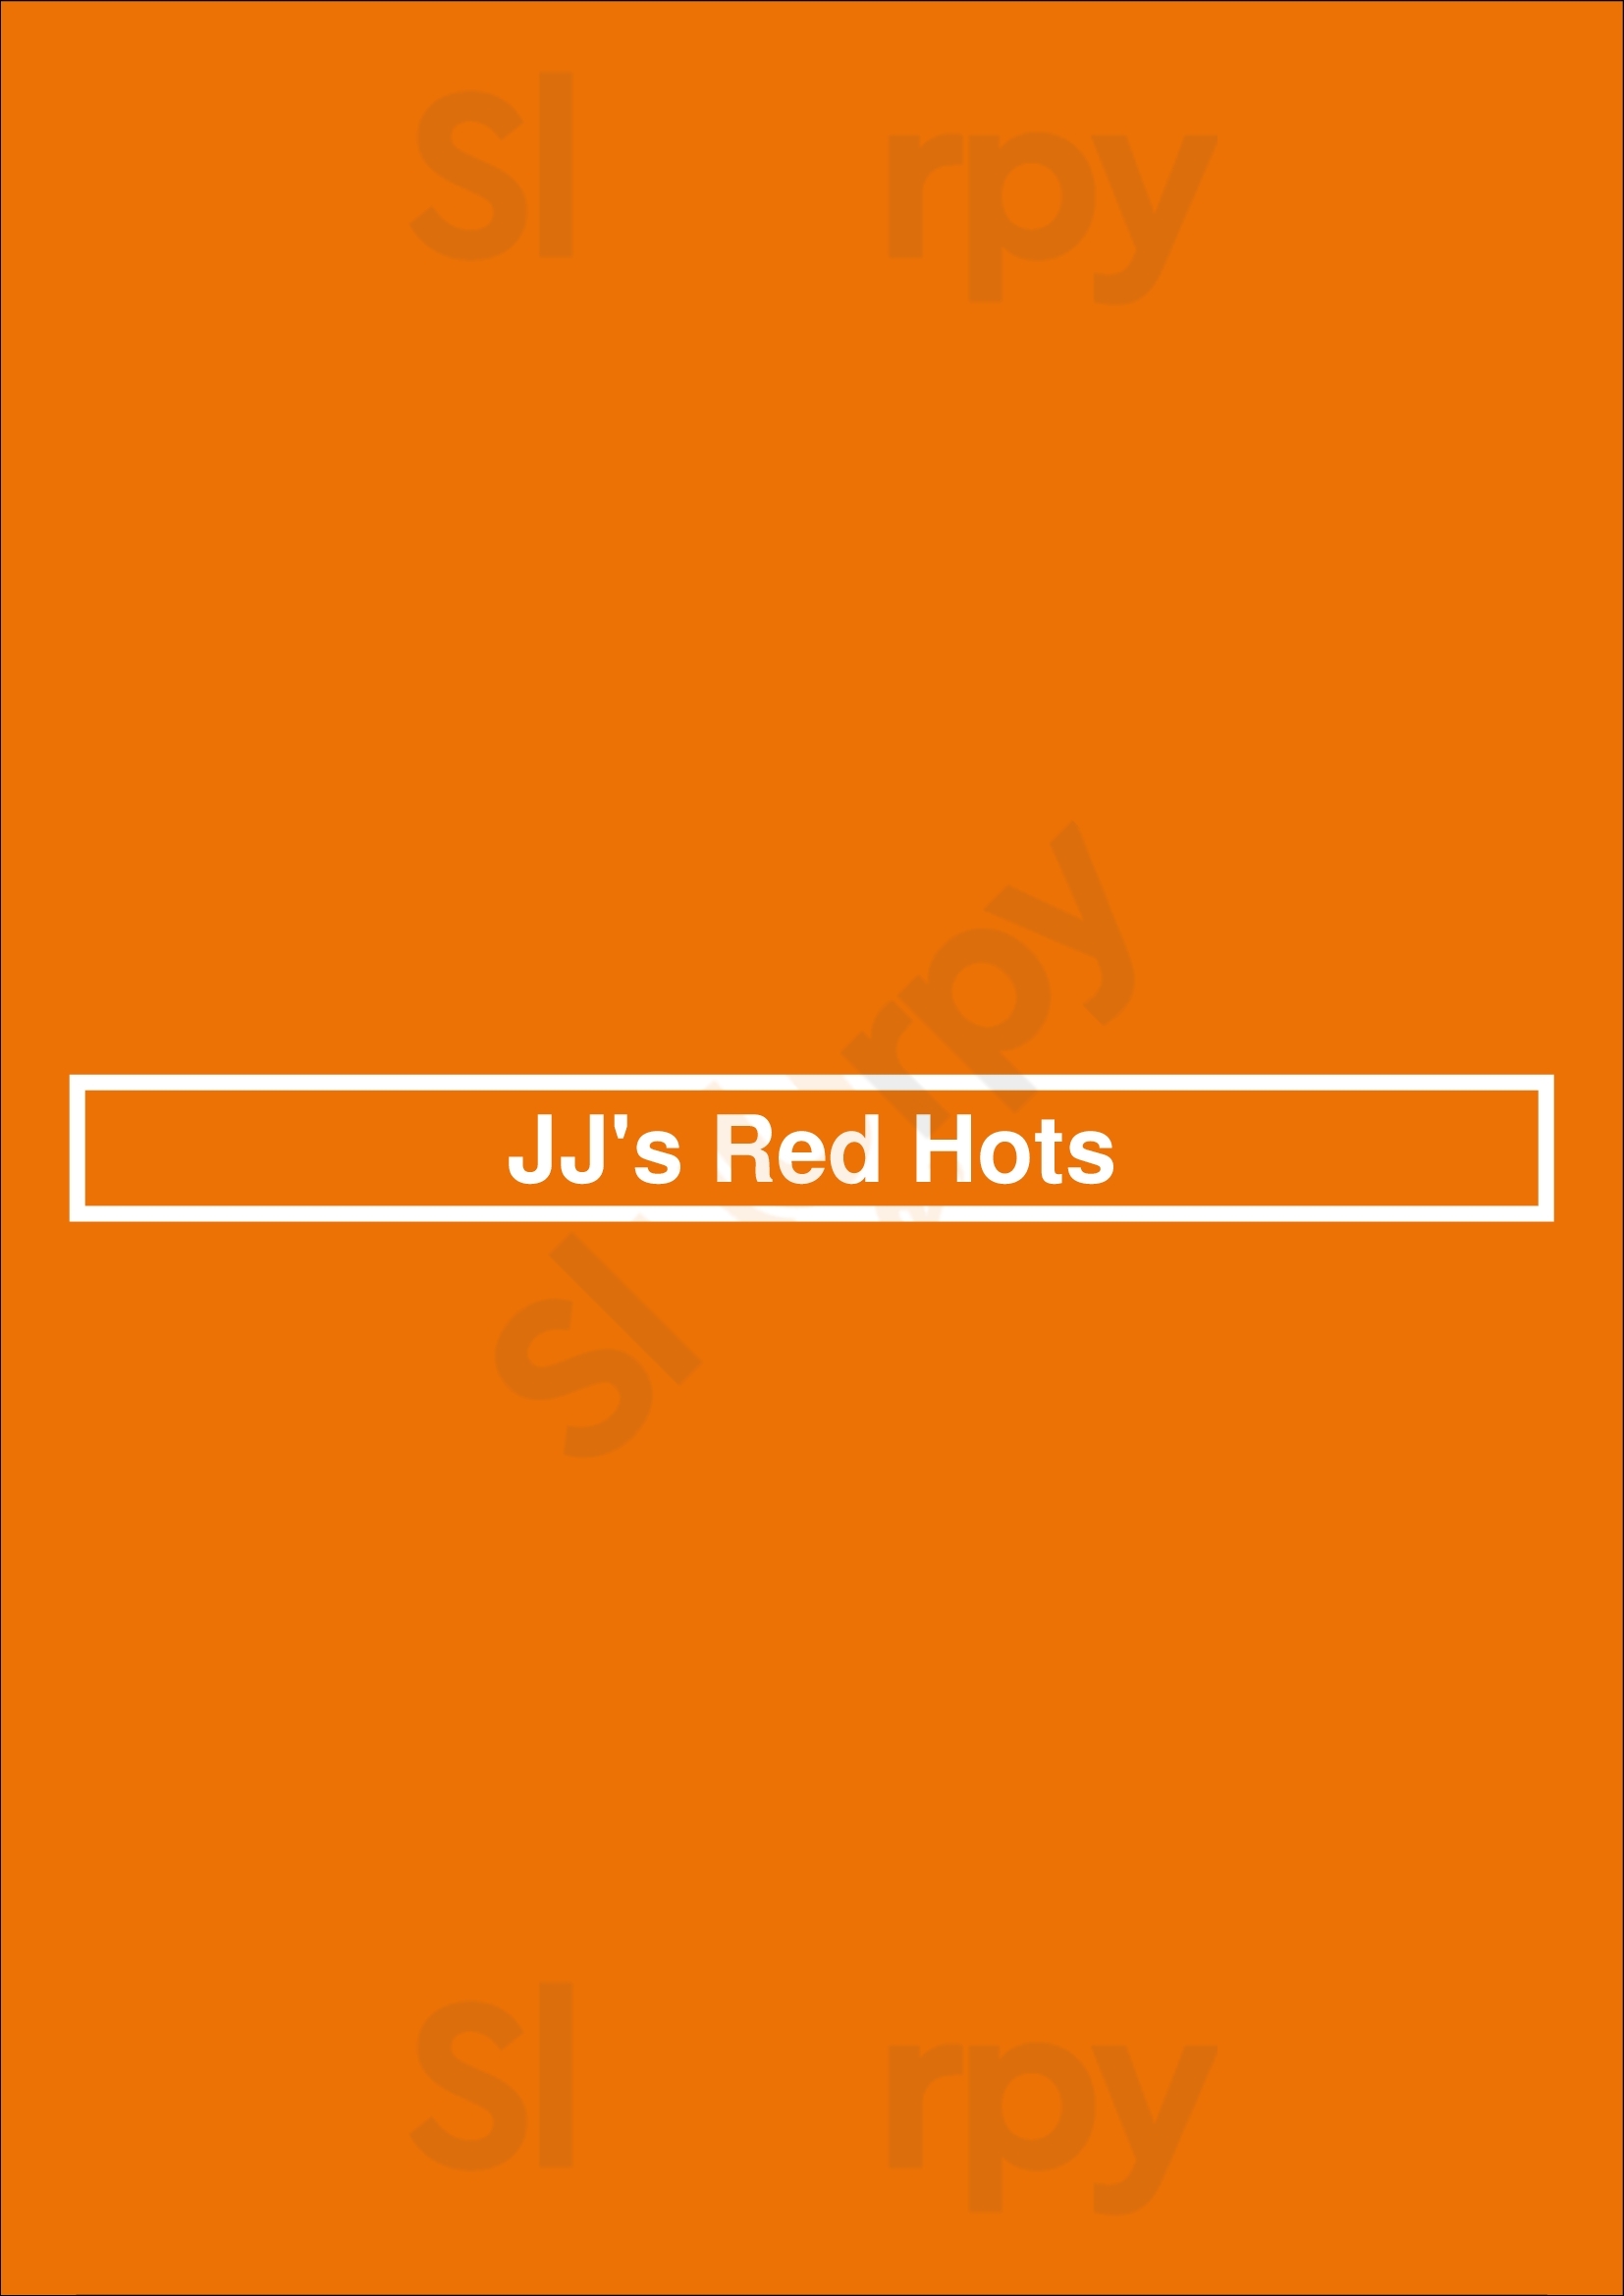 Jj's Red Hots Charlotte Menu - 1